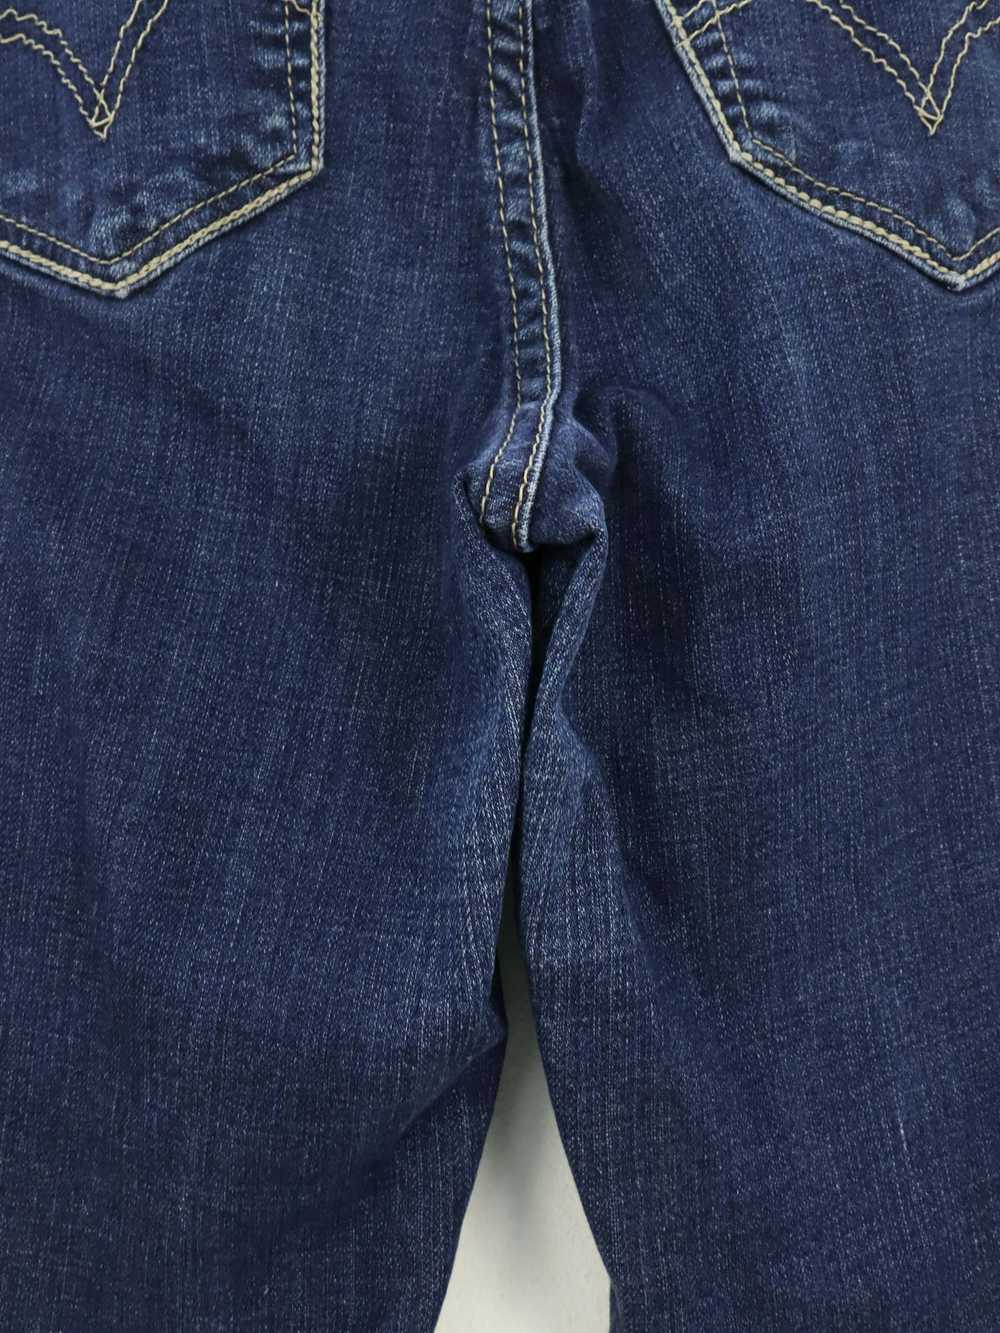 Levi's Levis Women Stretchable Skinny Jeans Pant - image 7